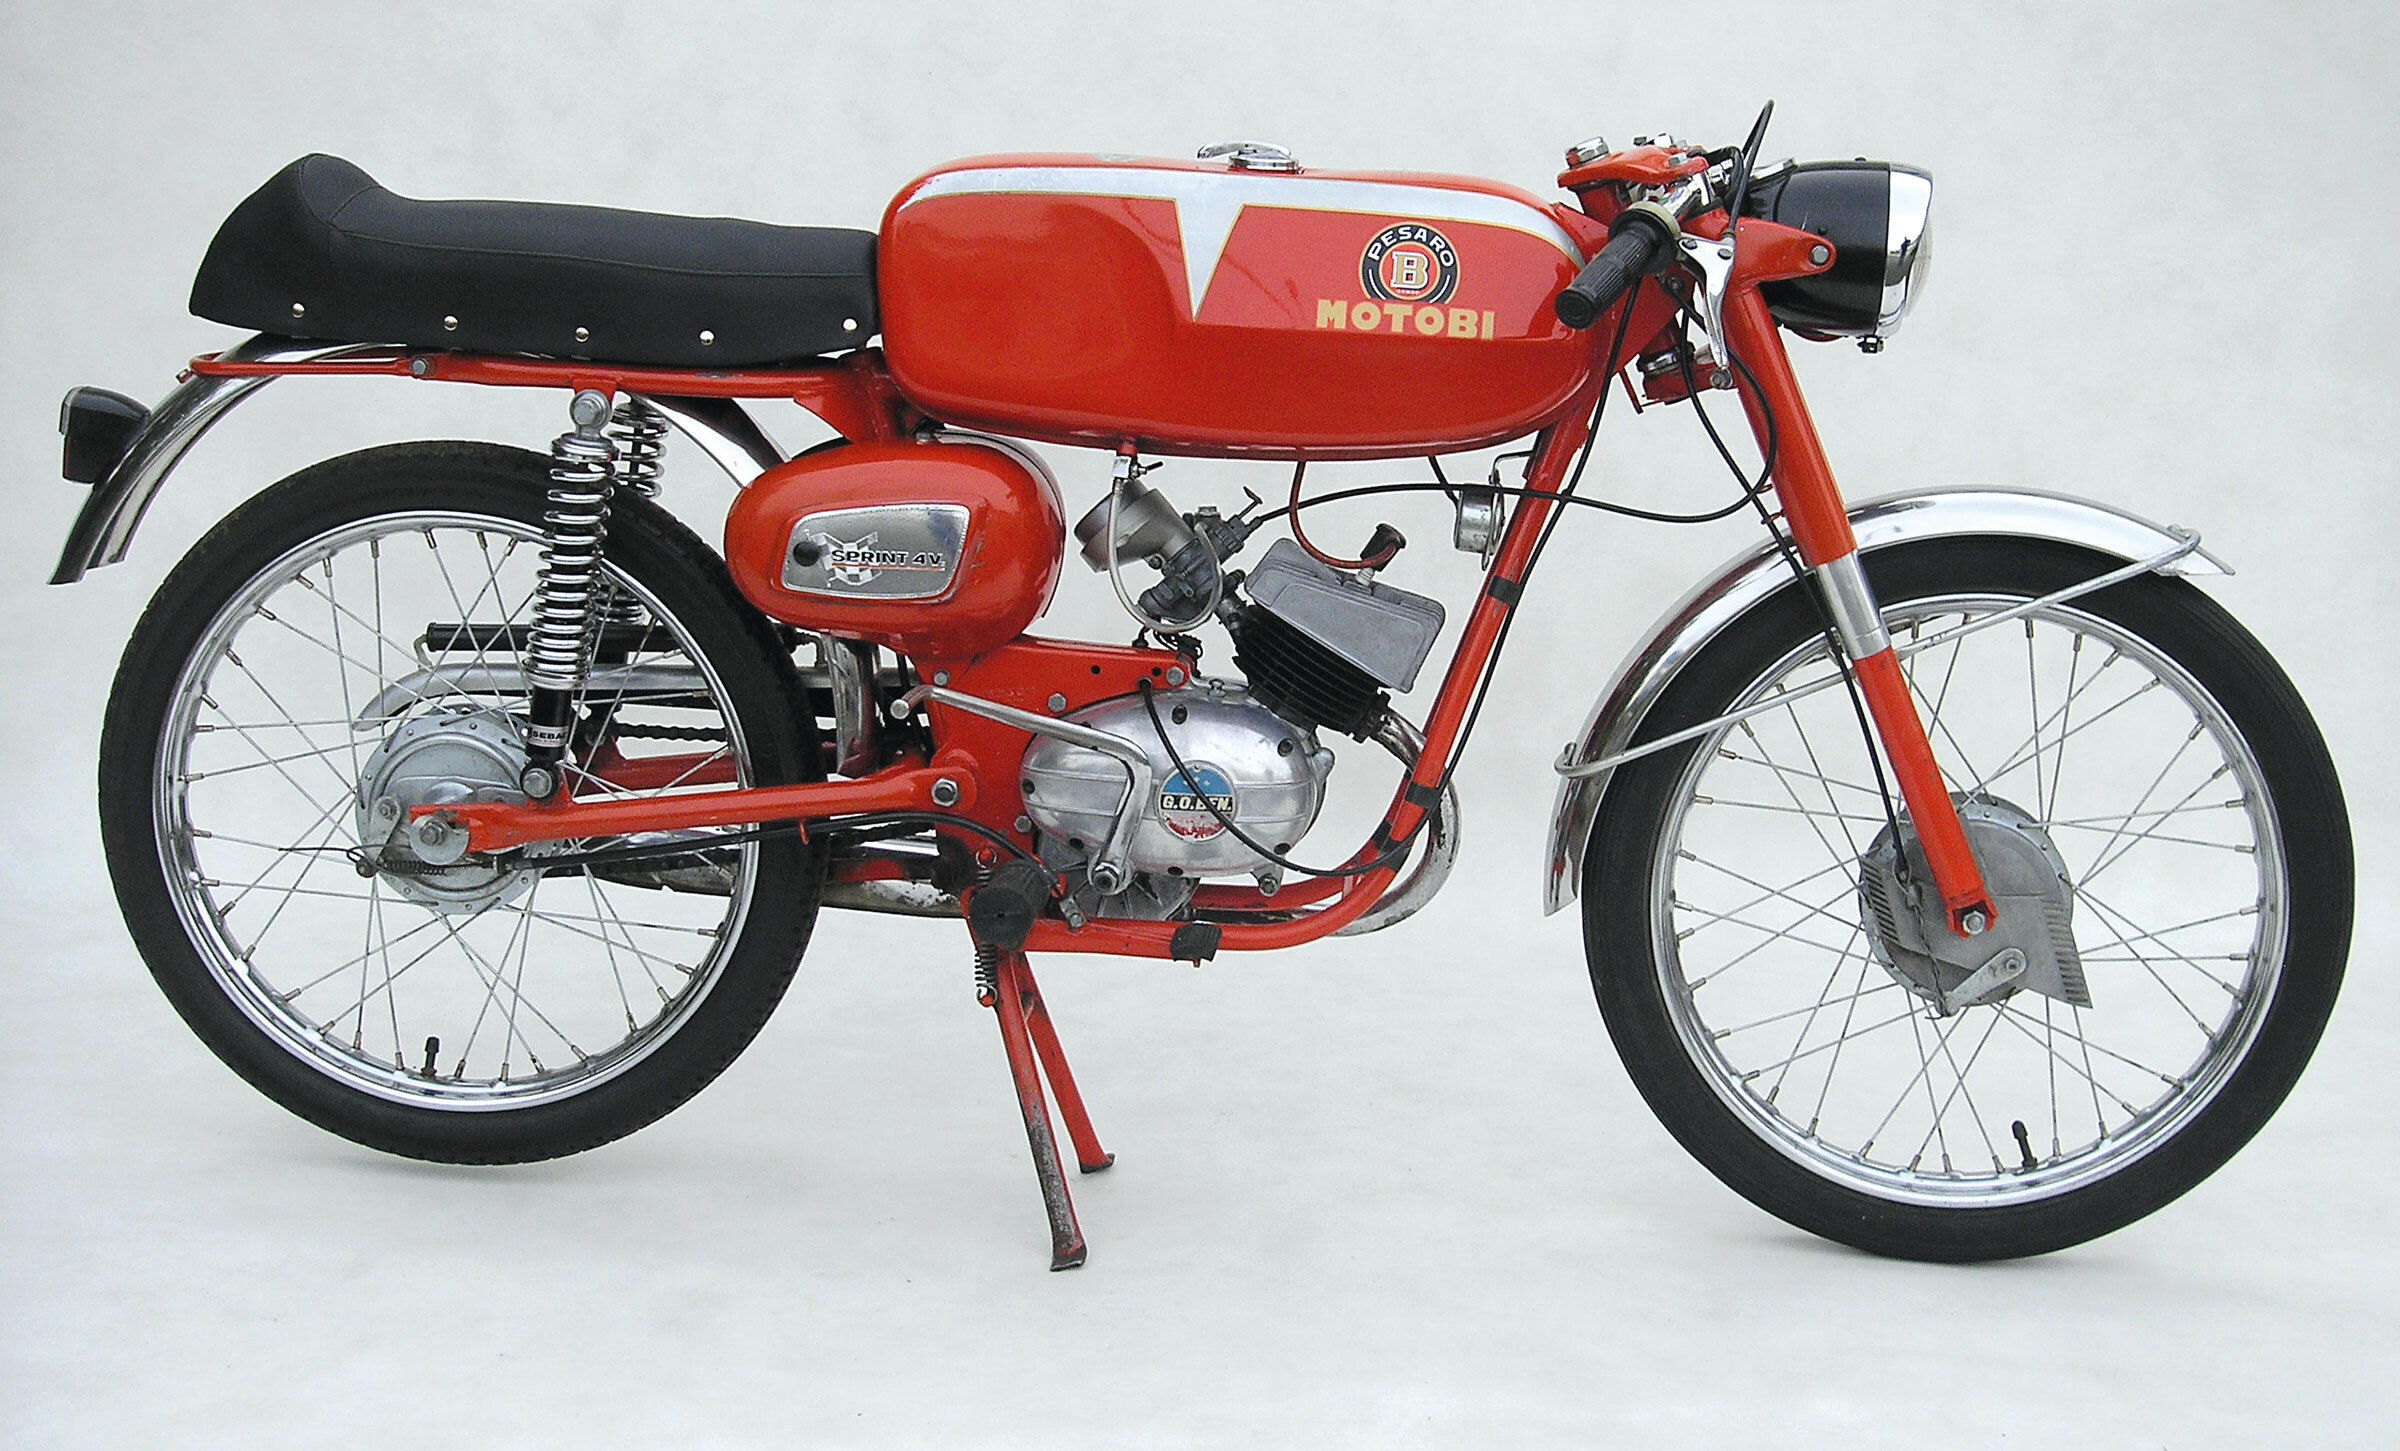 Motobi sport 1965 1